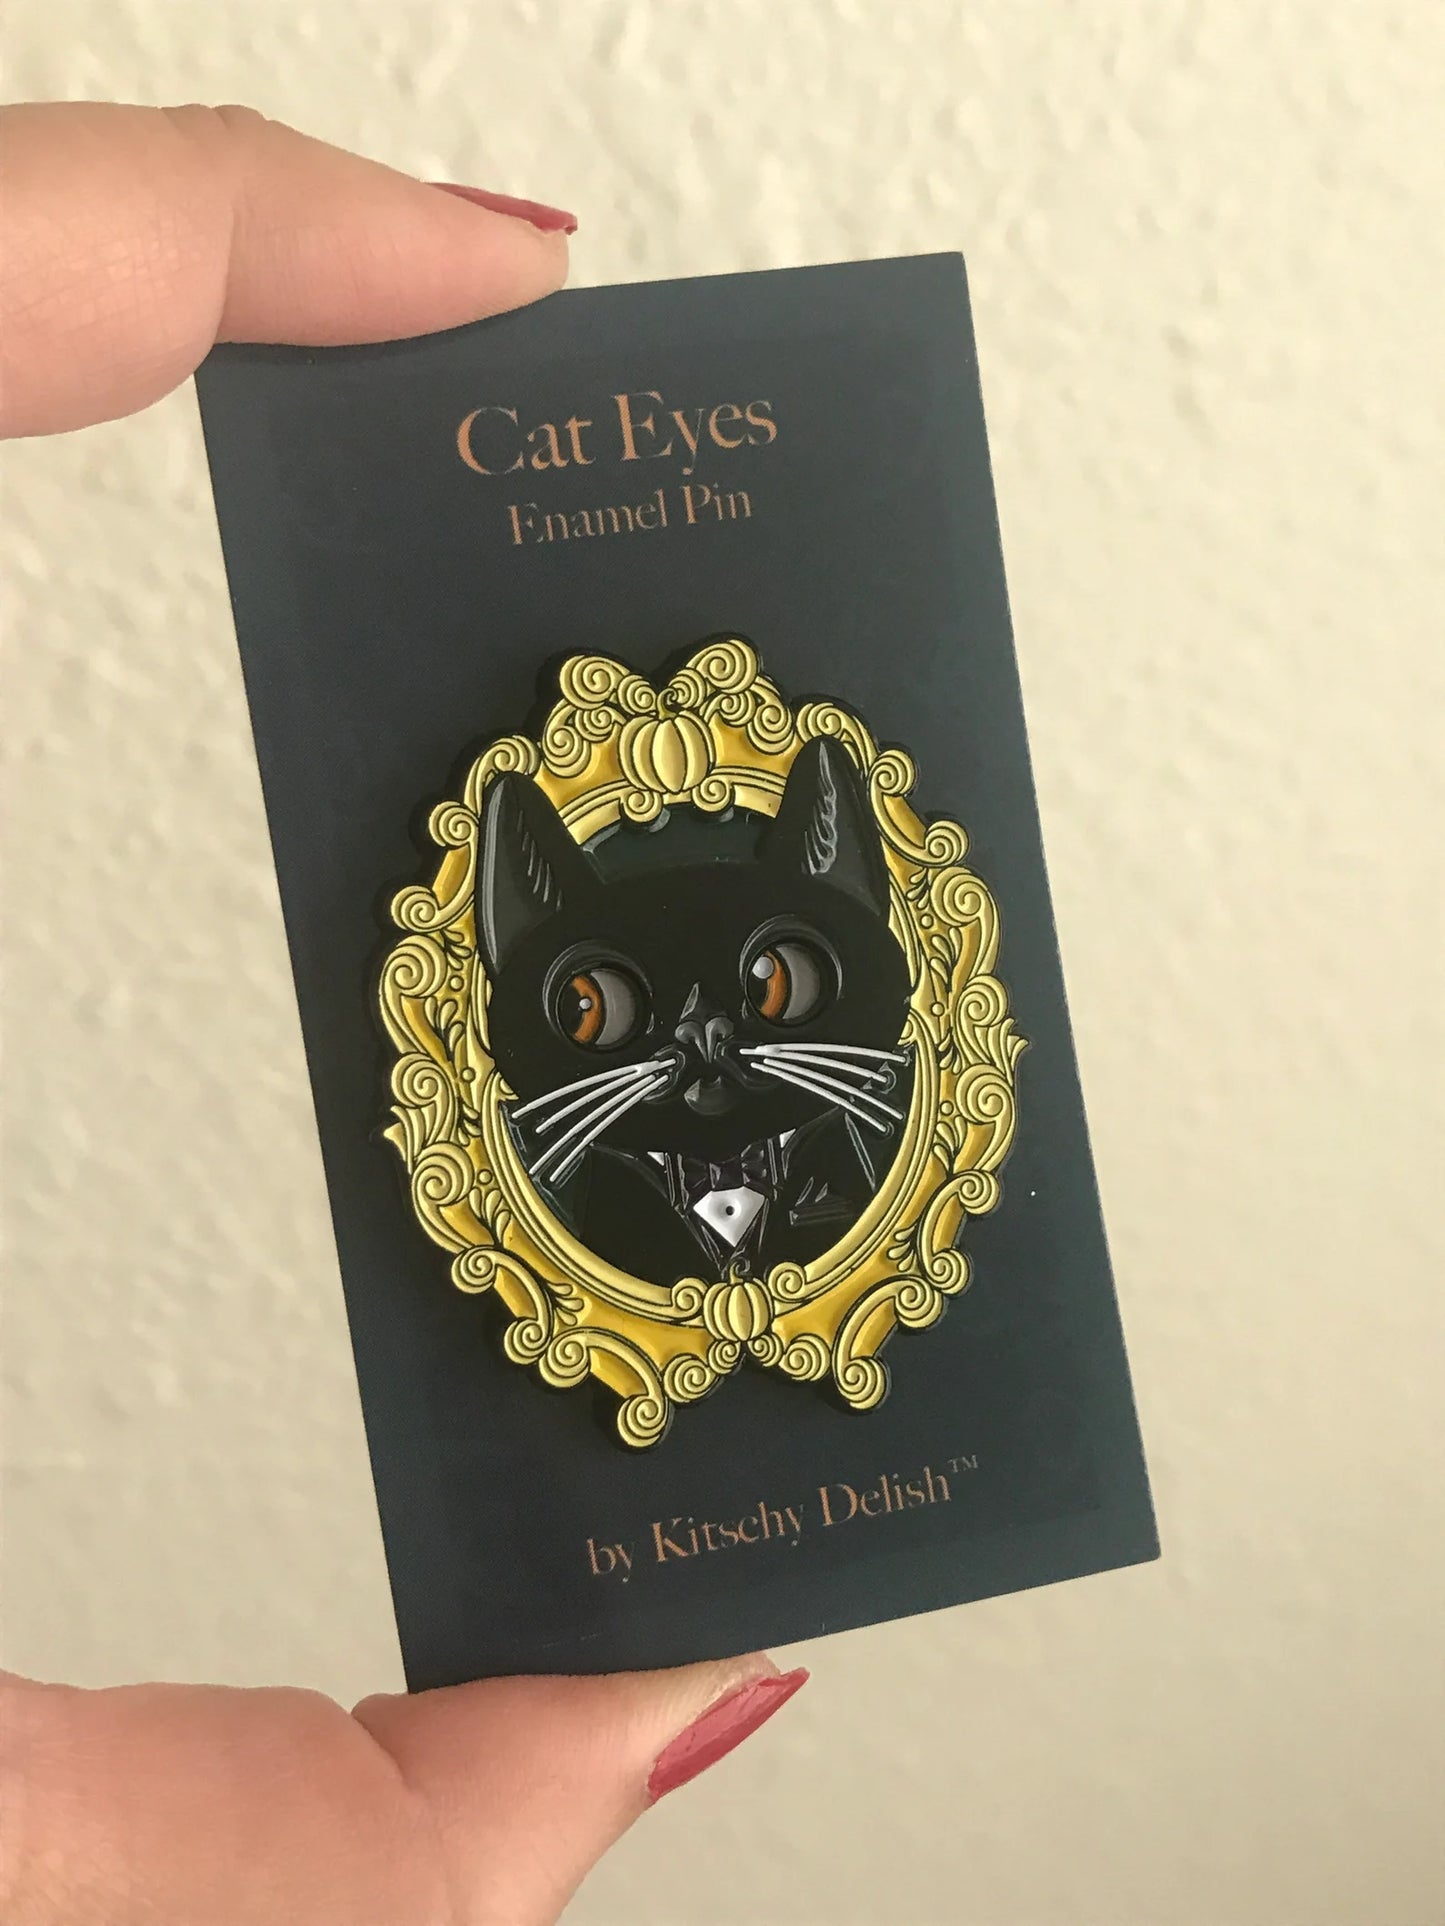 Moving Eyes Cat soft enamel pin by Kitschy Delish